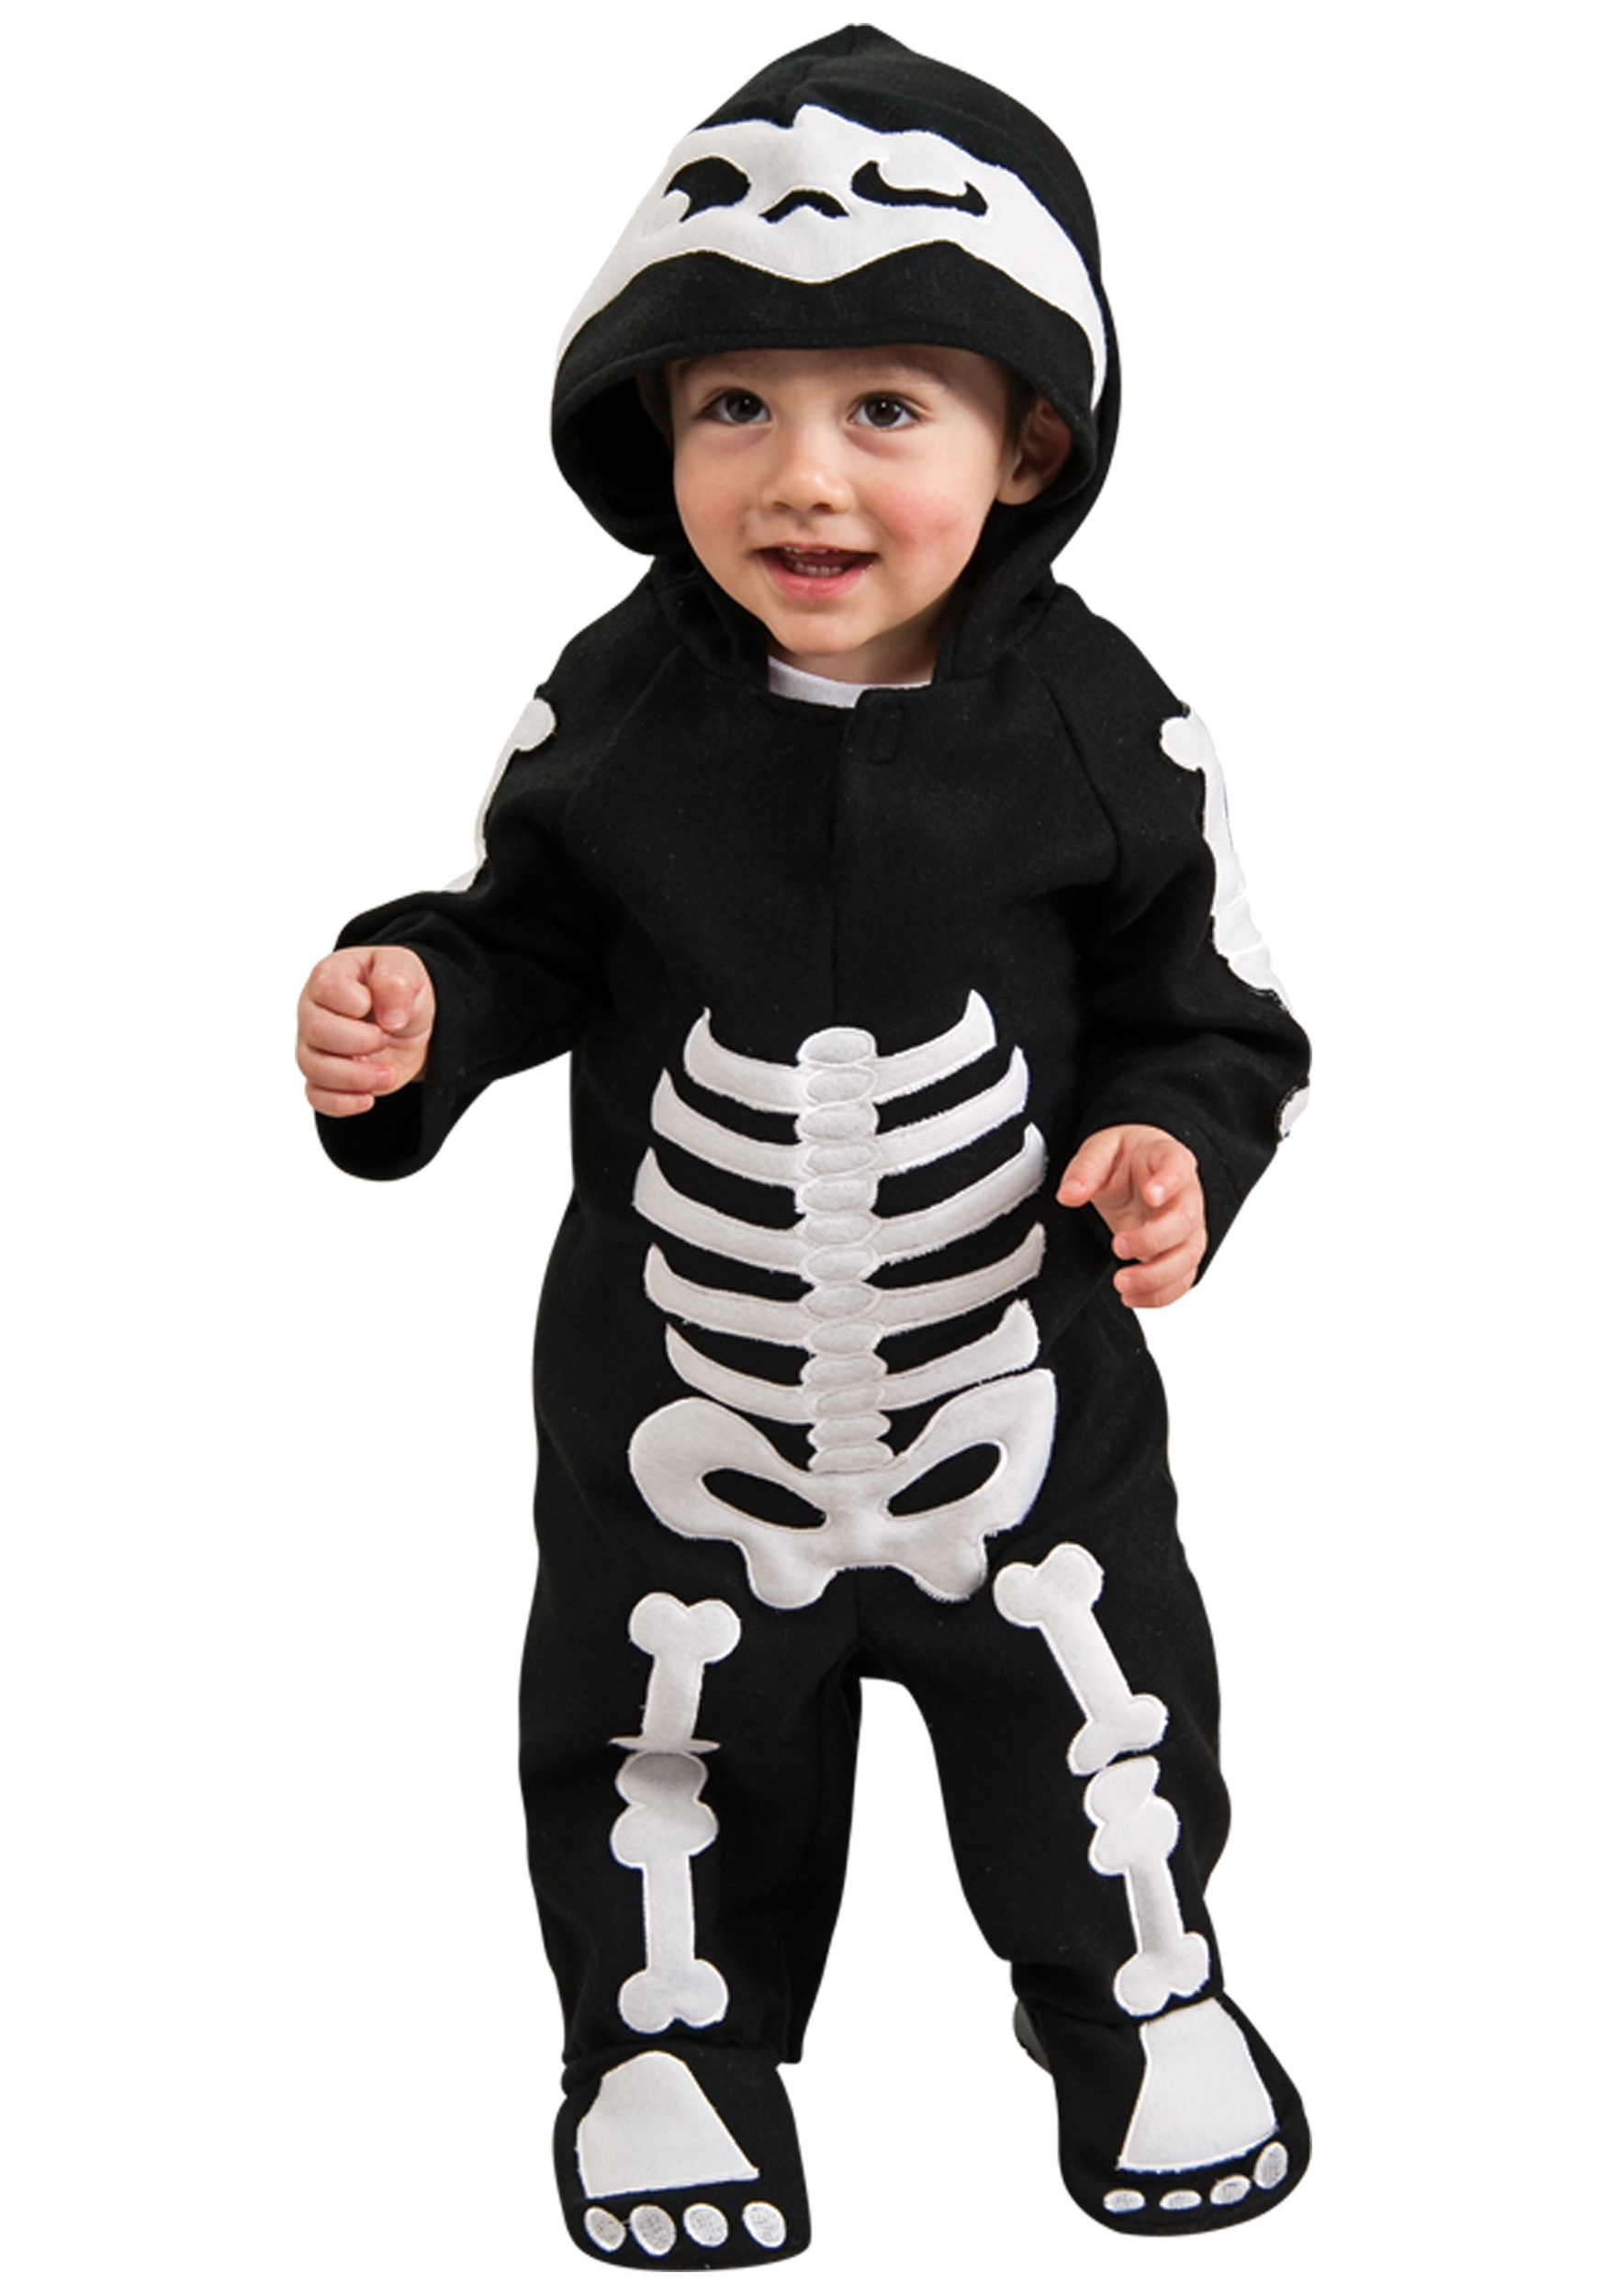 Photos - Fancy Dress Rubies Costume Co. Inc Toddler/Baby Skeleton Costume Black RU885990 